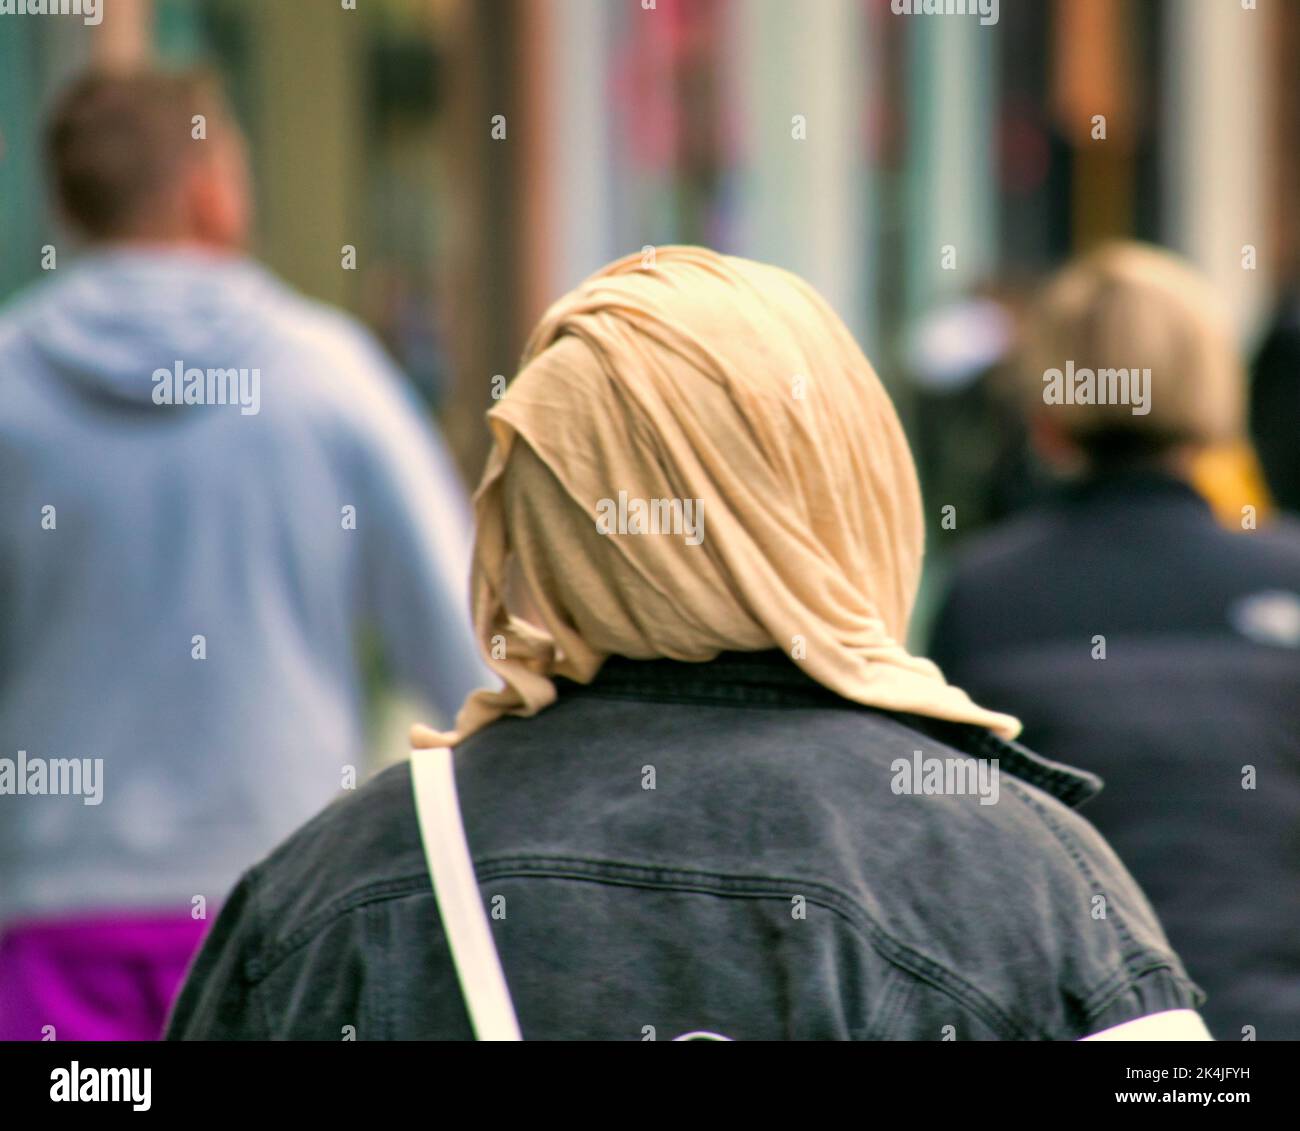 Muslim woman wearing hijab scarf from behind Glasgow, Scotland, UK Stock Photo